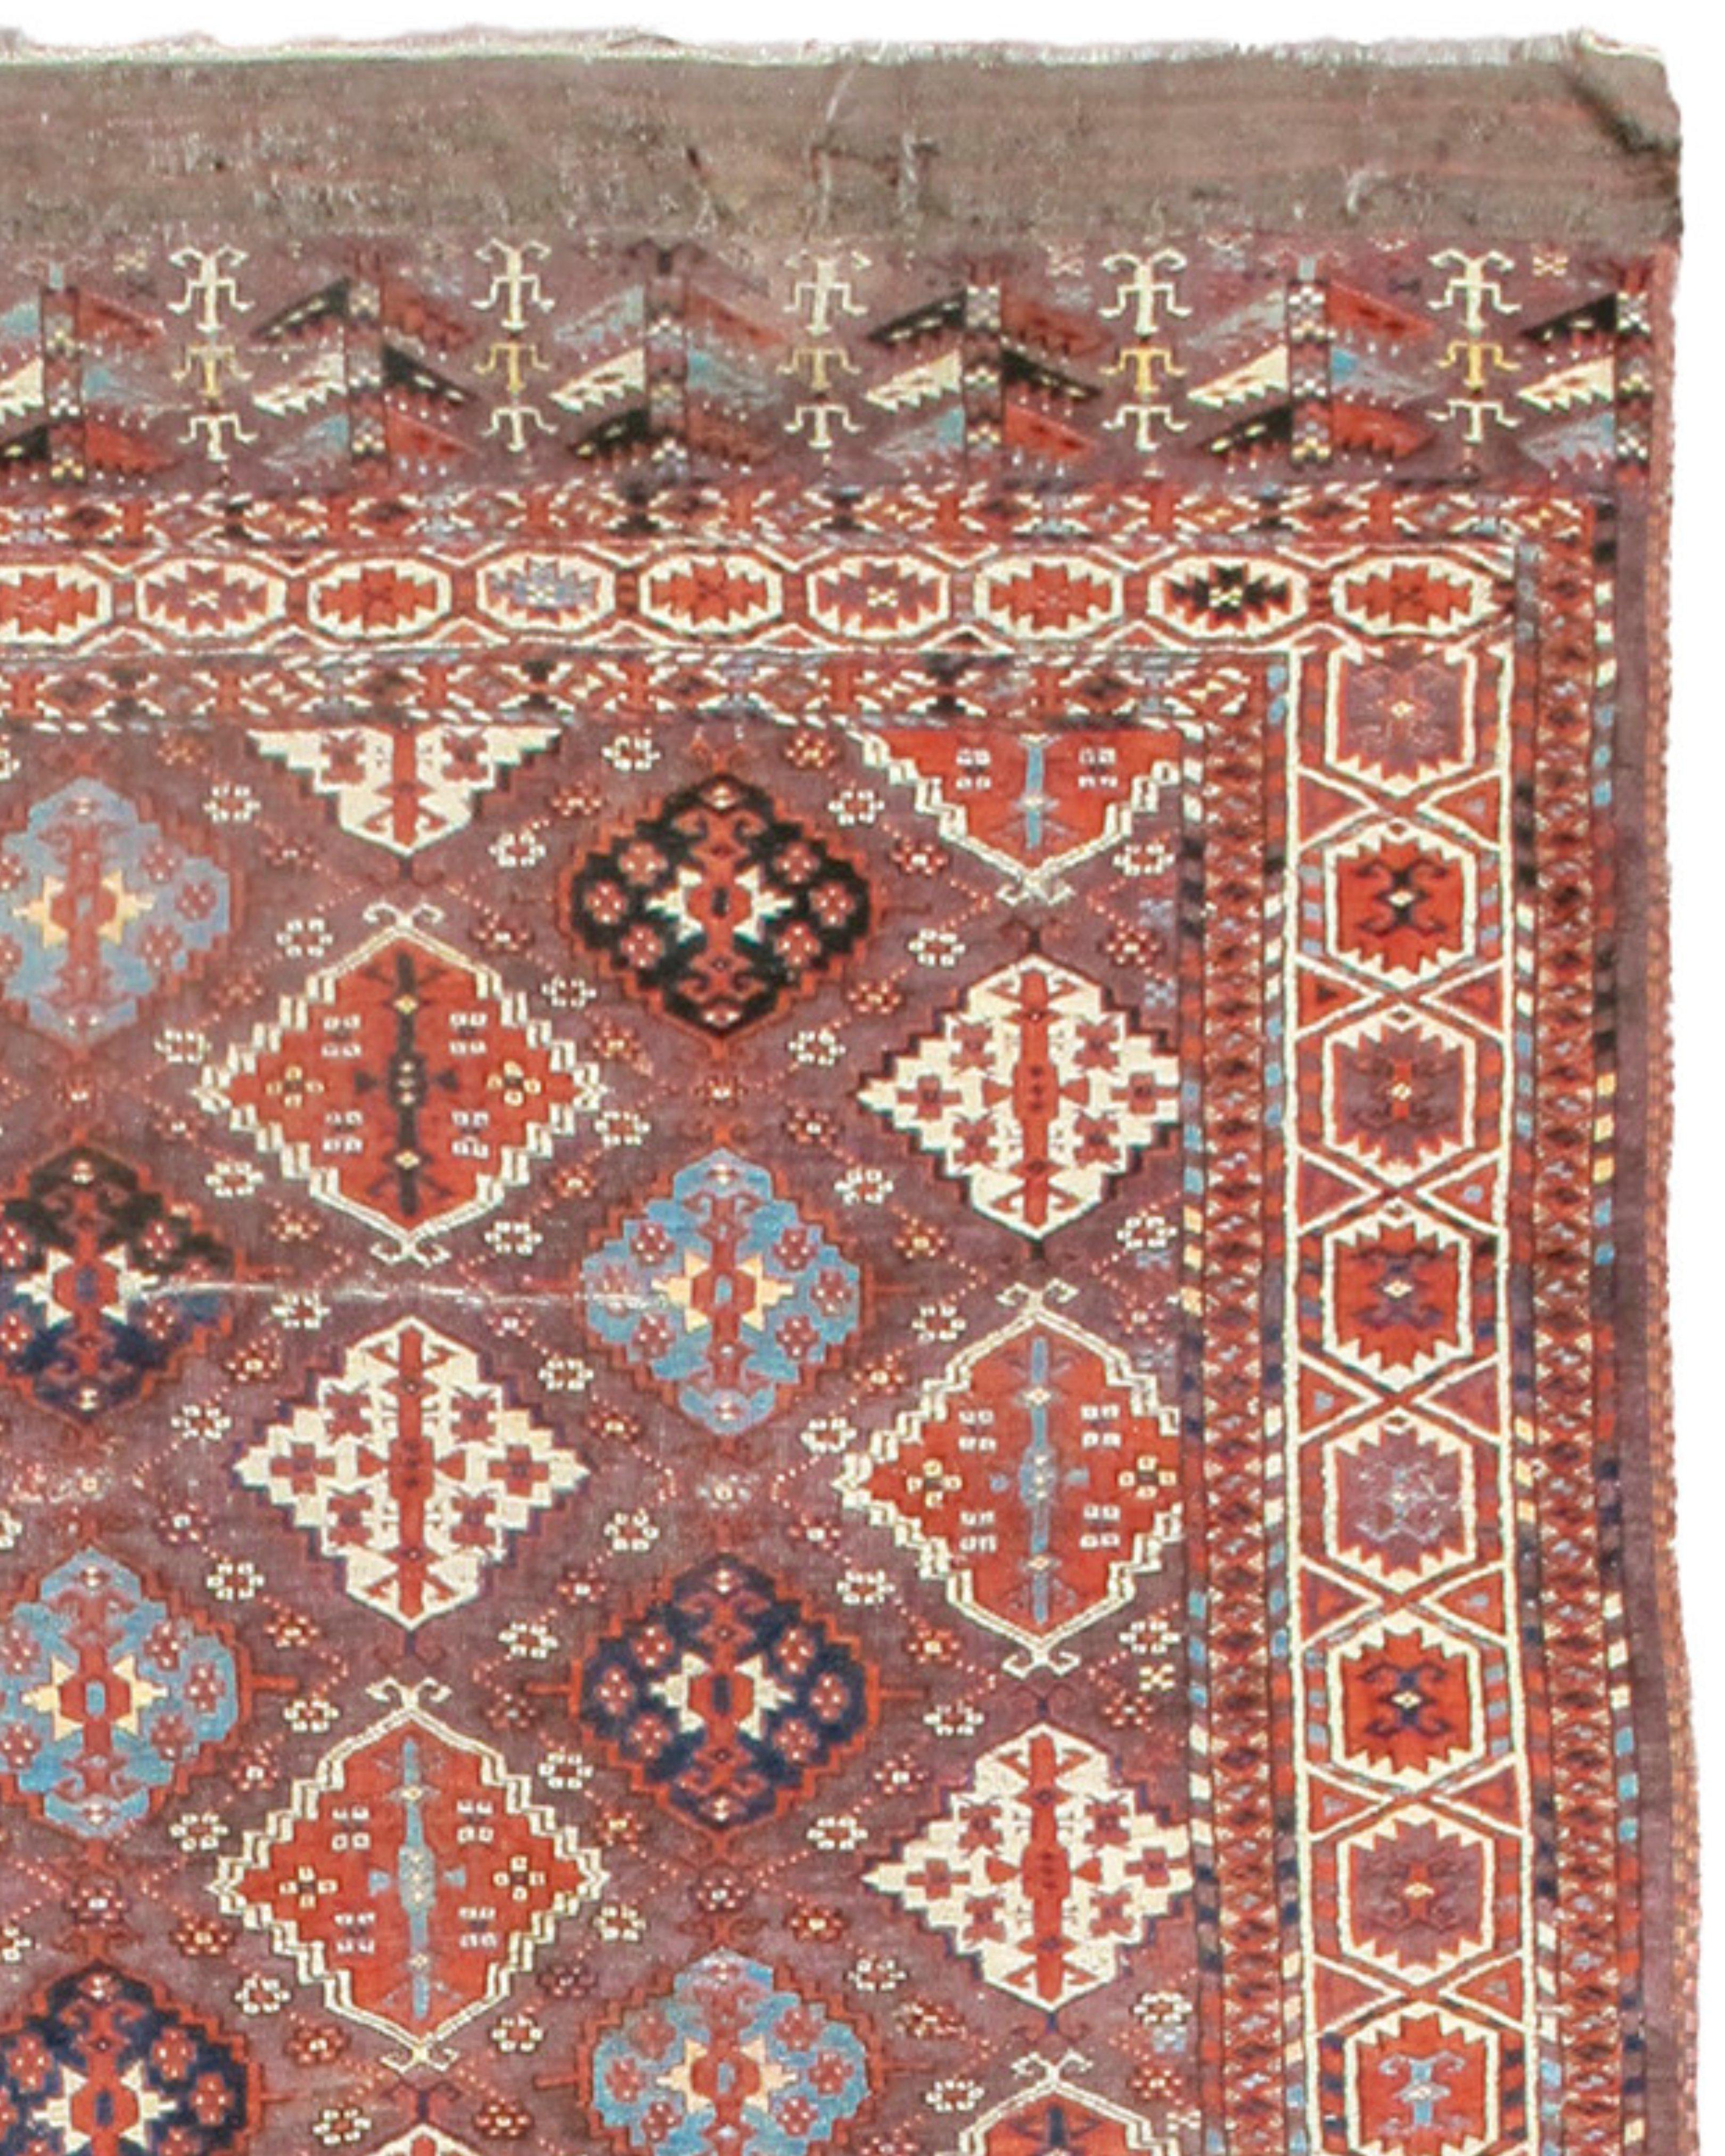 Chodor Main Carpet Rug, 19th Century

Additional Information:
Dimensions: 7'7